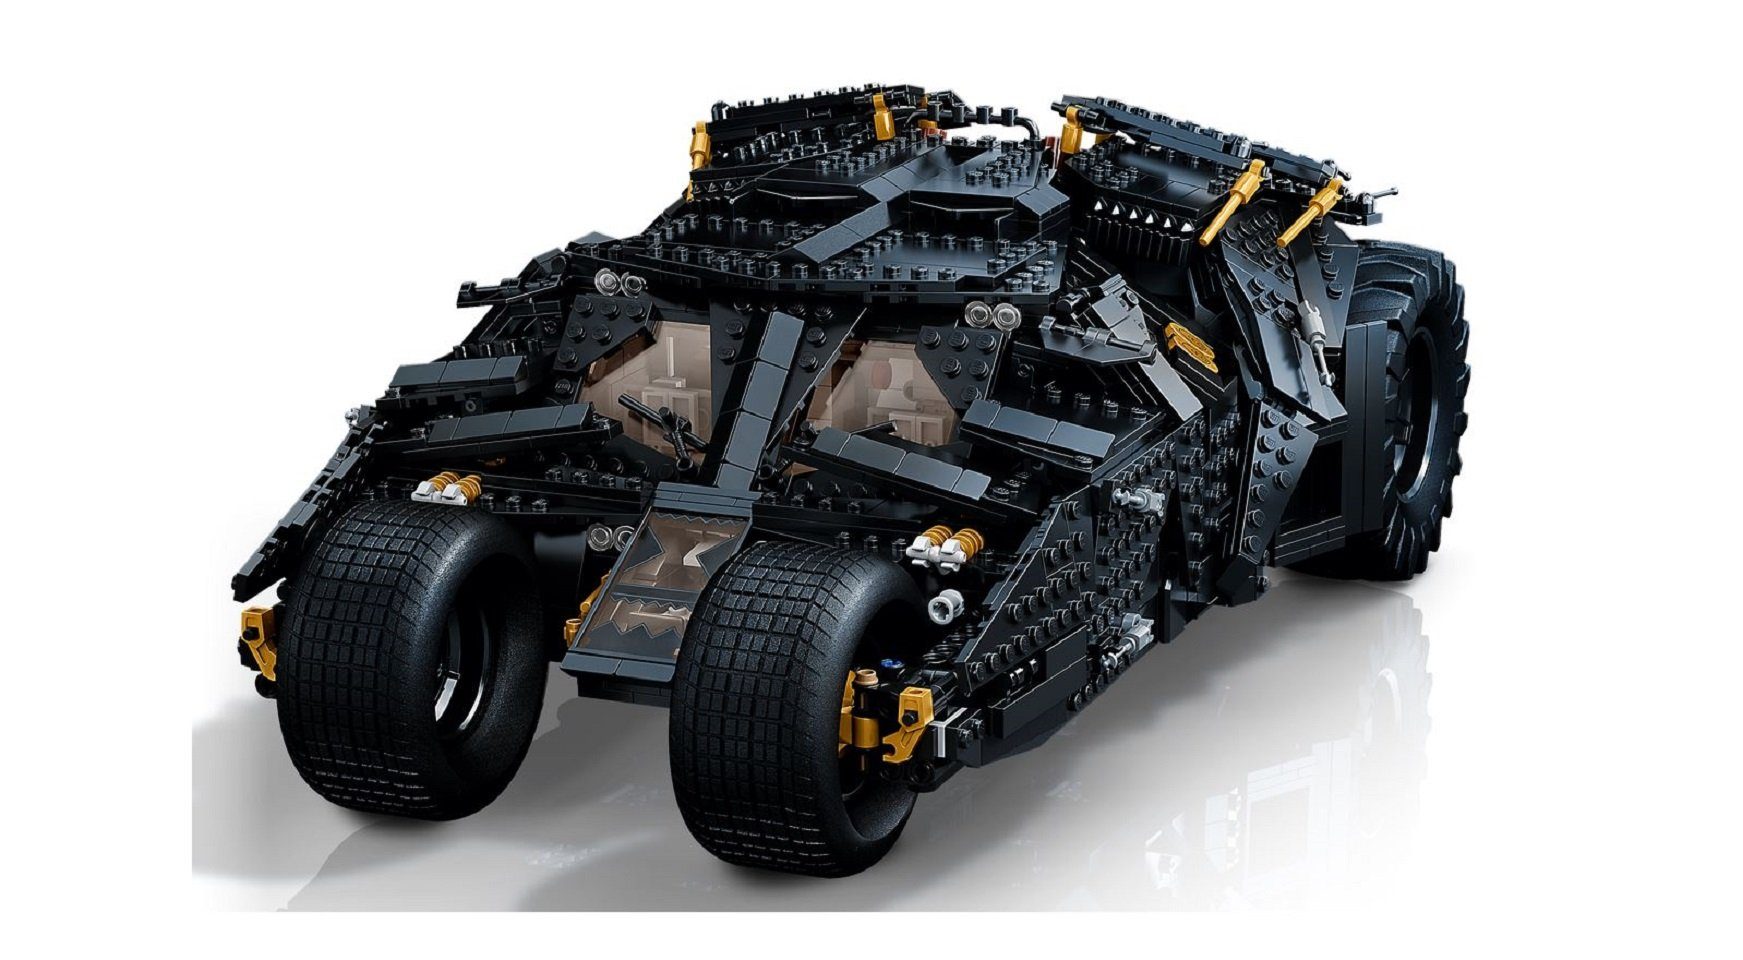 LEGO® Konstruktionsspielsteine Batman DC - Batmobile 76240, (2049 - Tumbler St)